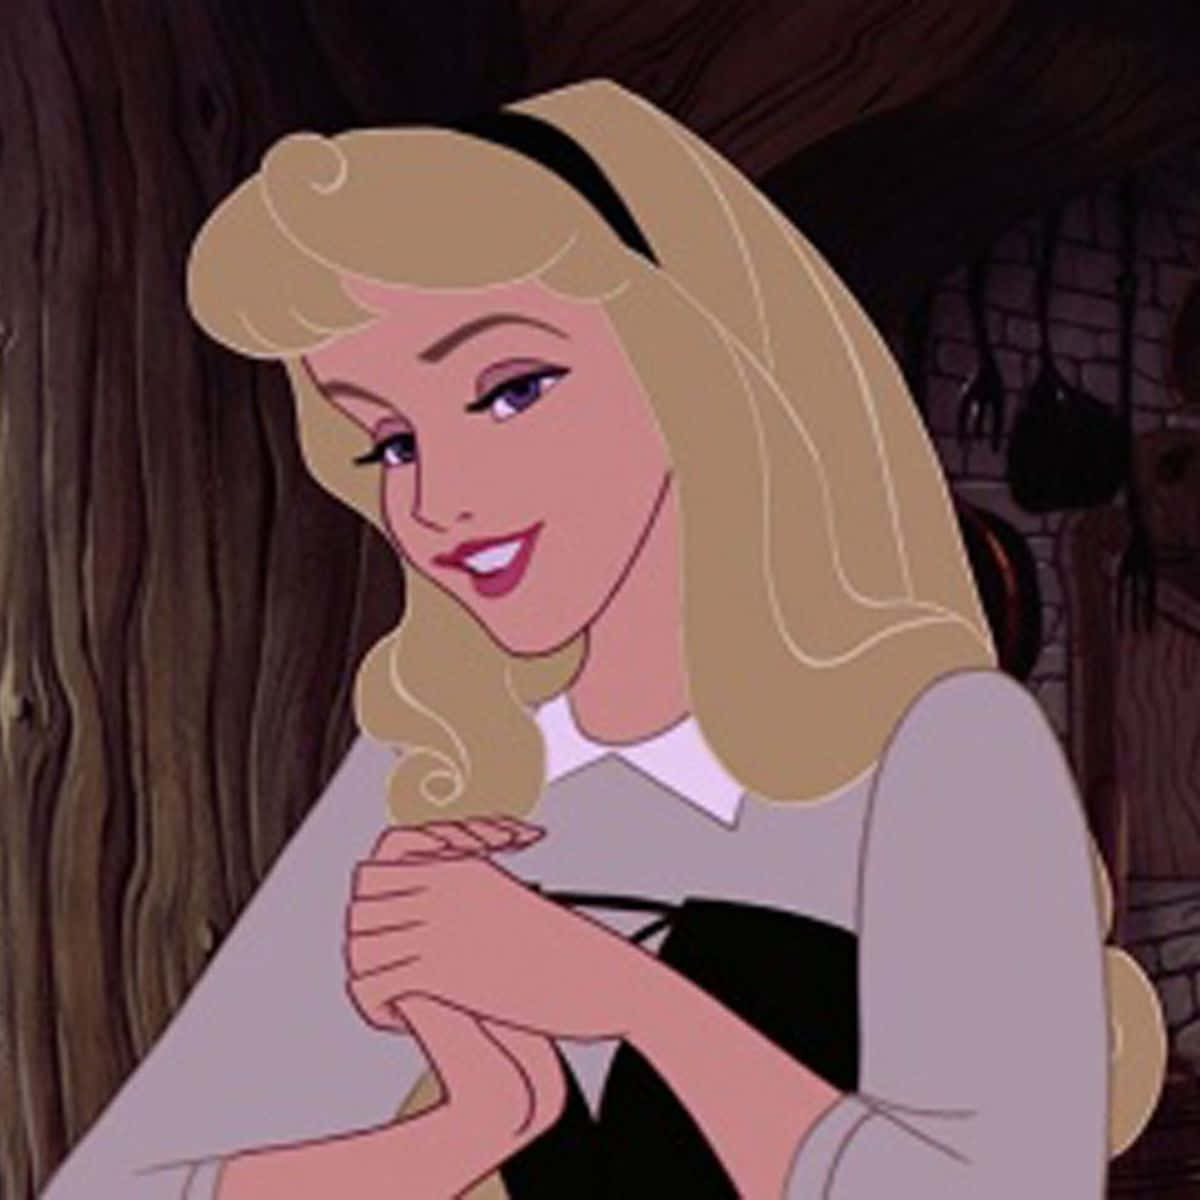 A Disney Princess With Long Blonde Hair